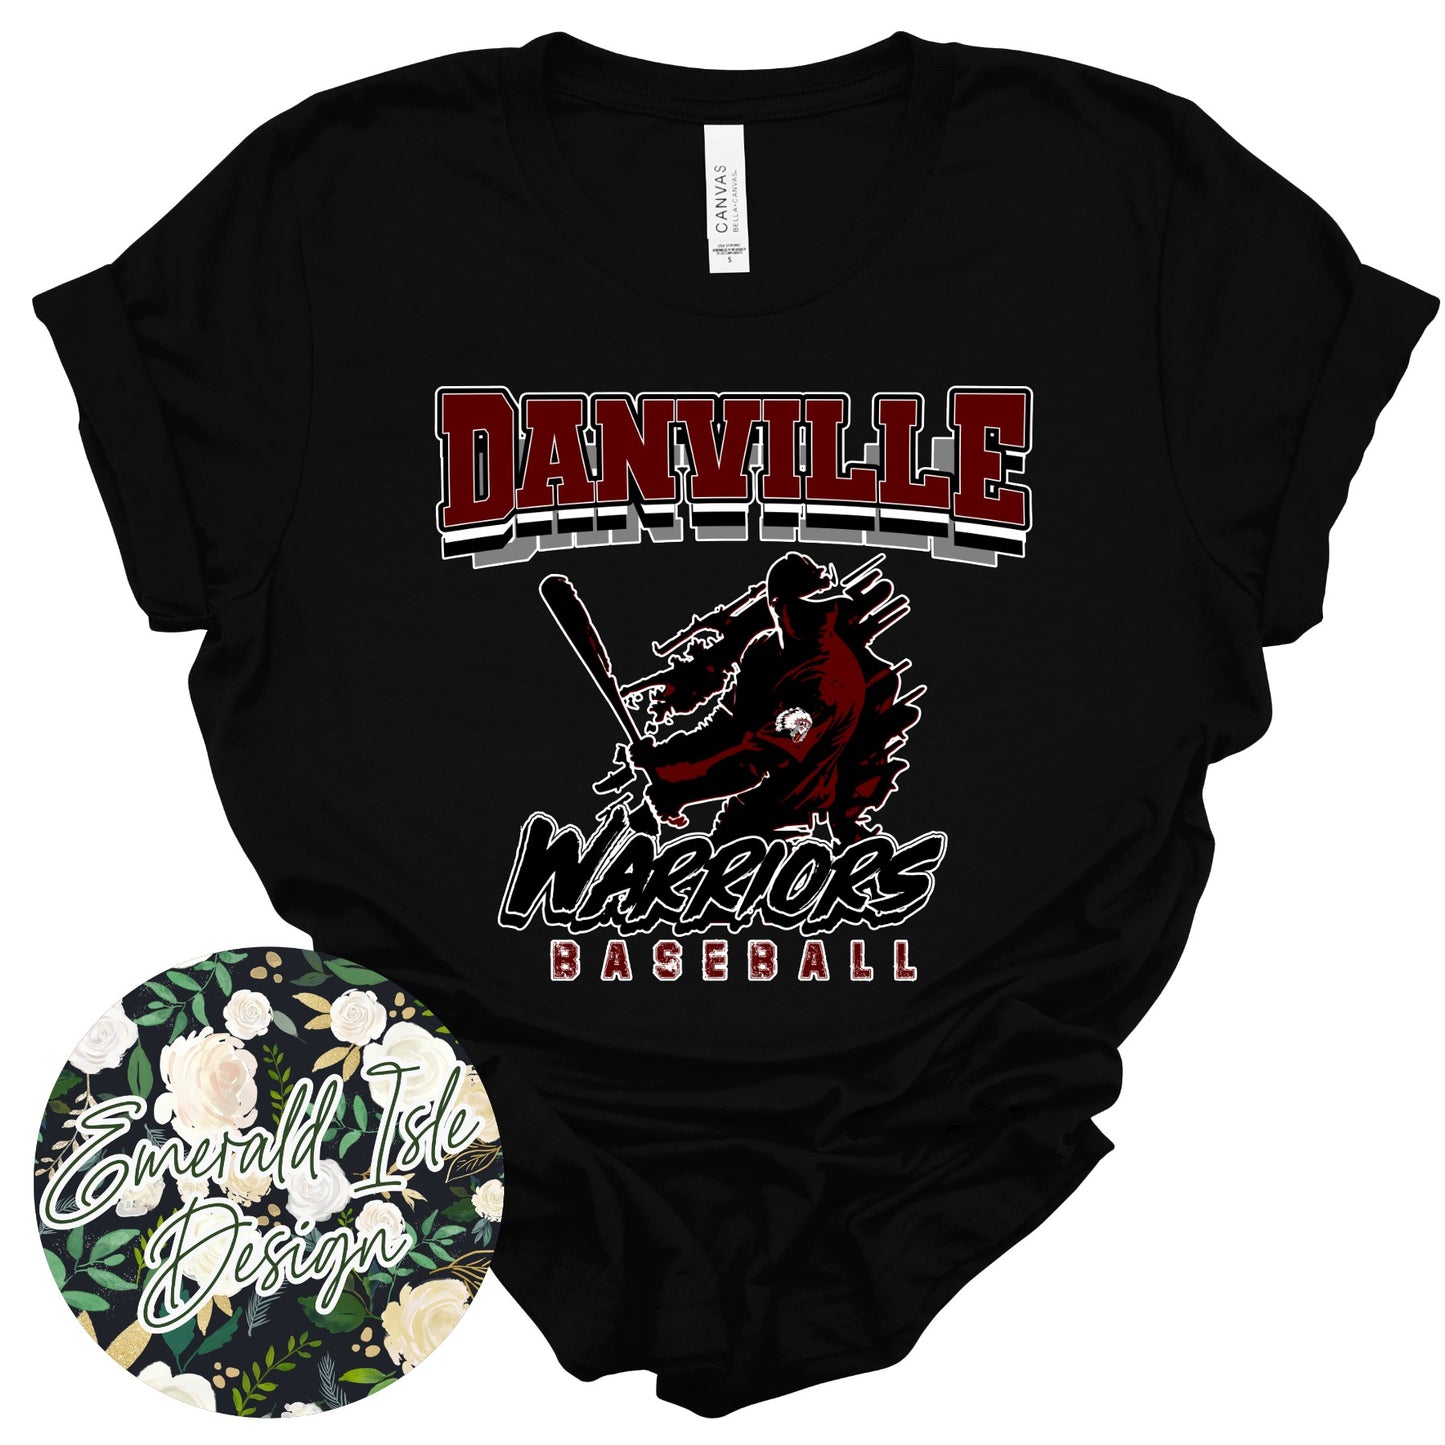 Danville Warriors Baseball Design